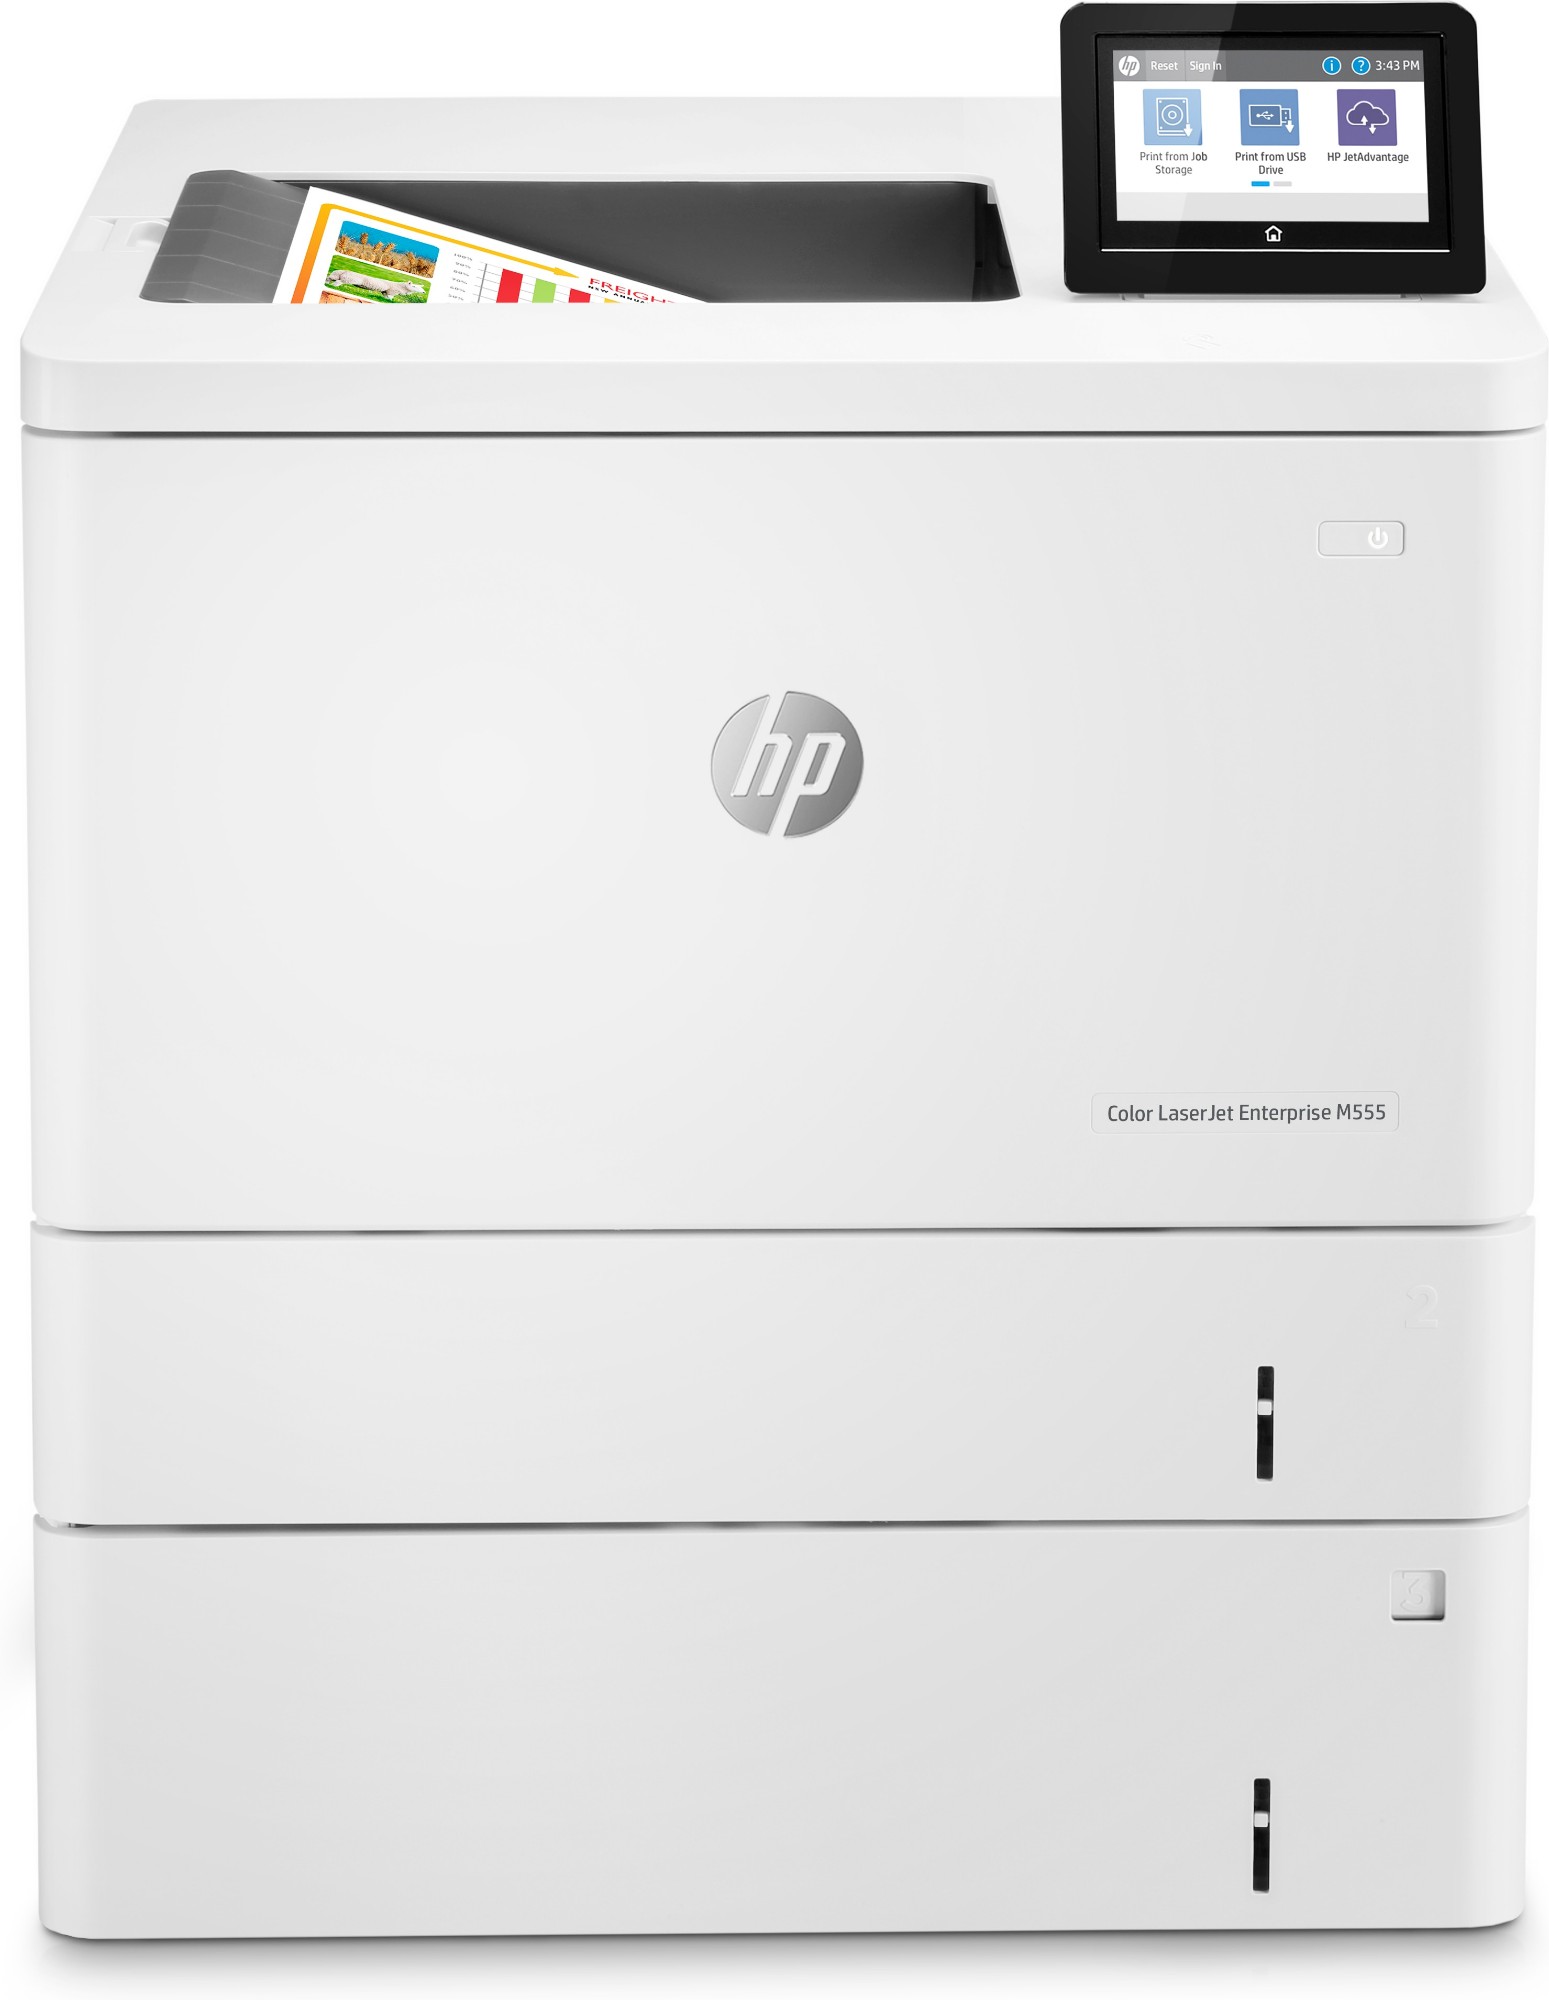 HP Color LaserJet Enterprise M555x, Utskrift, Dubbelsidig utskrift